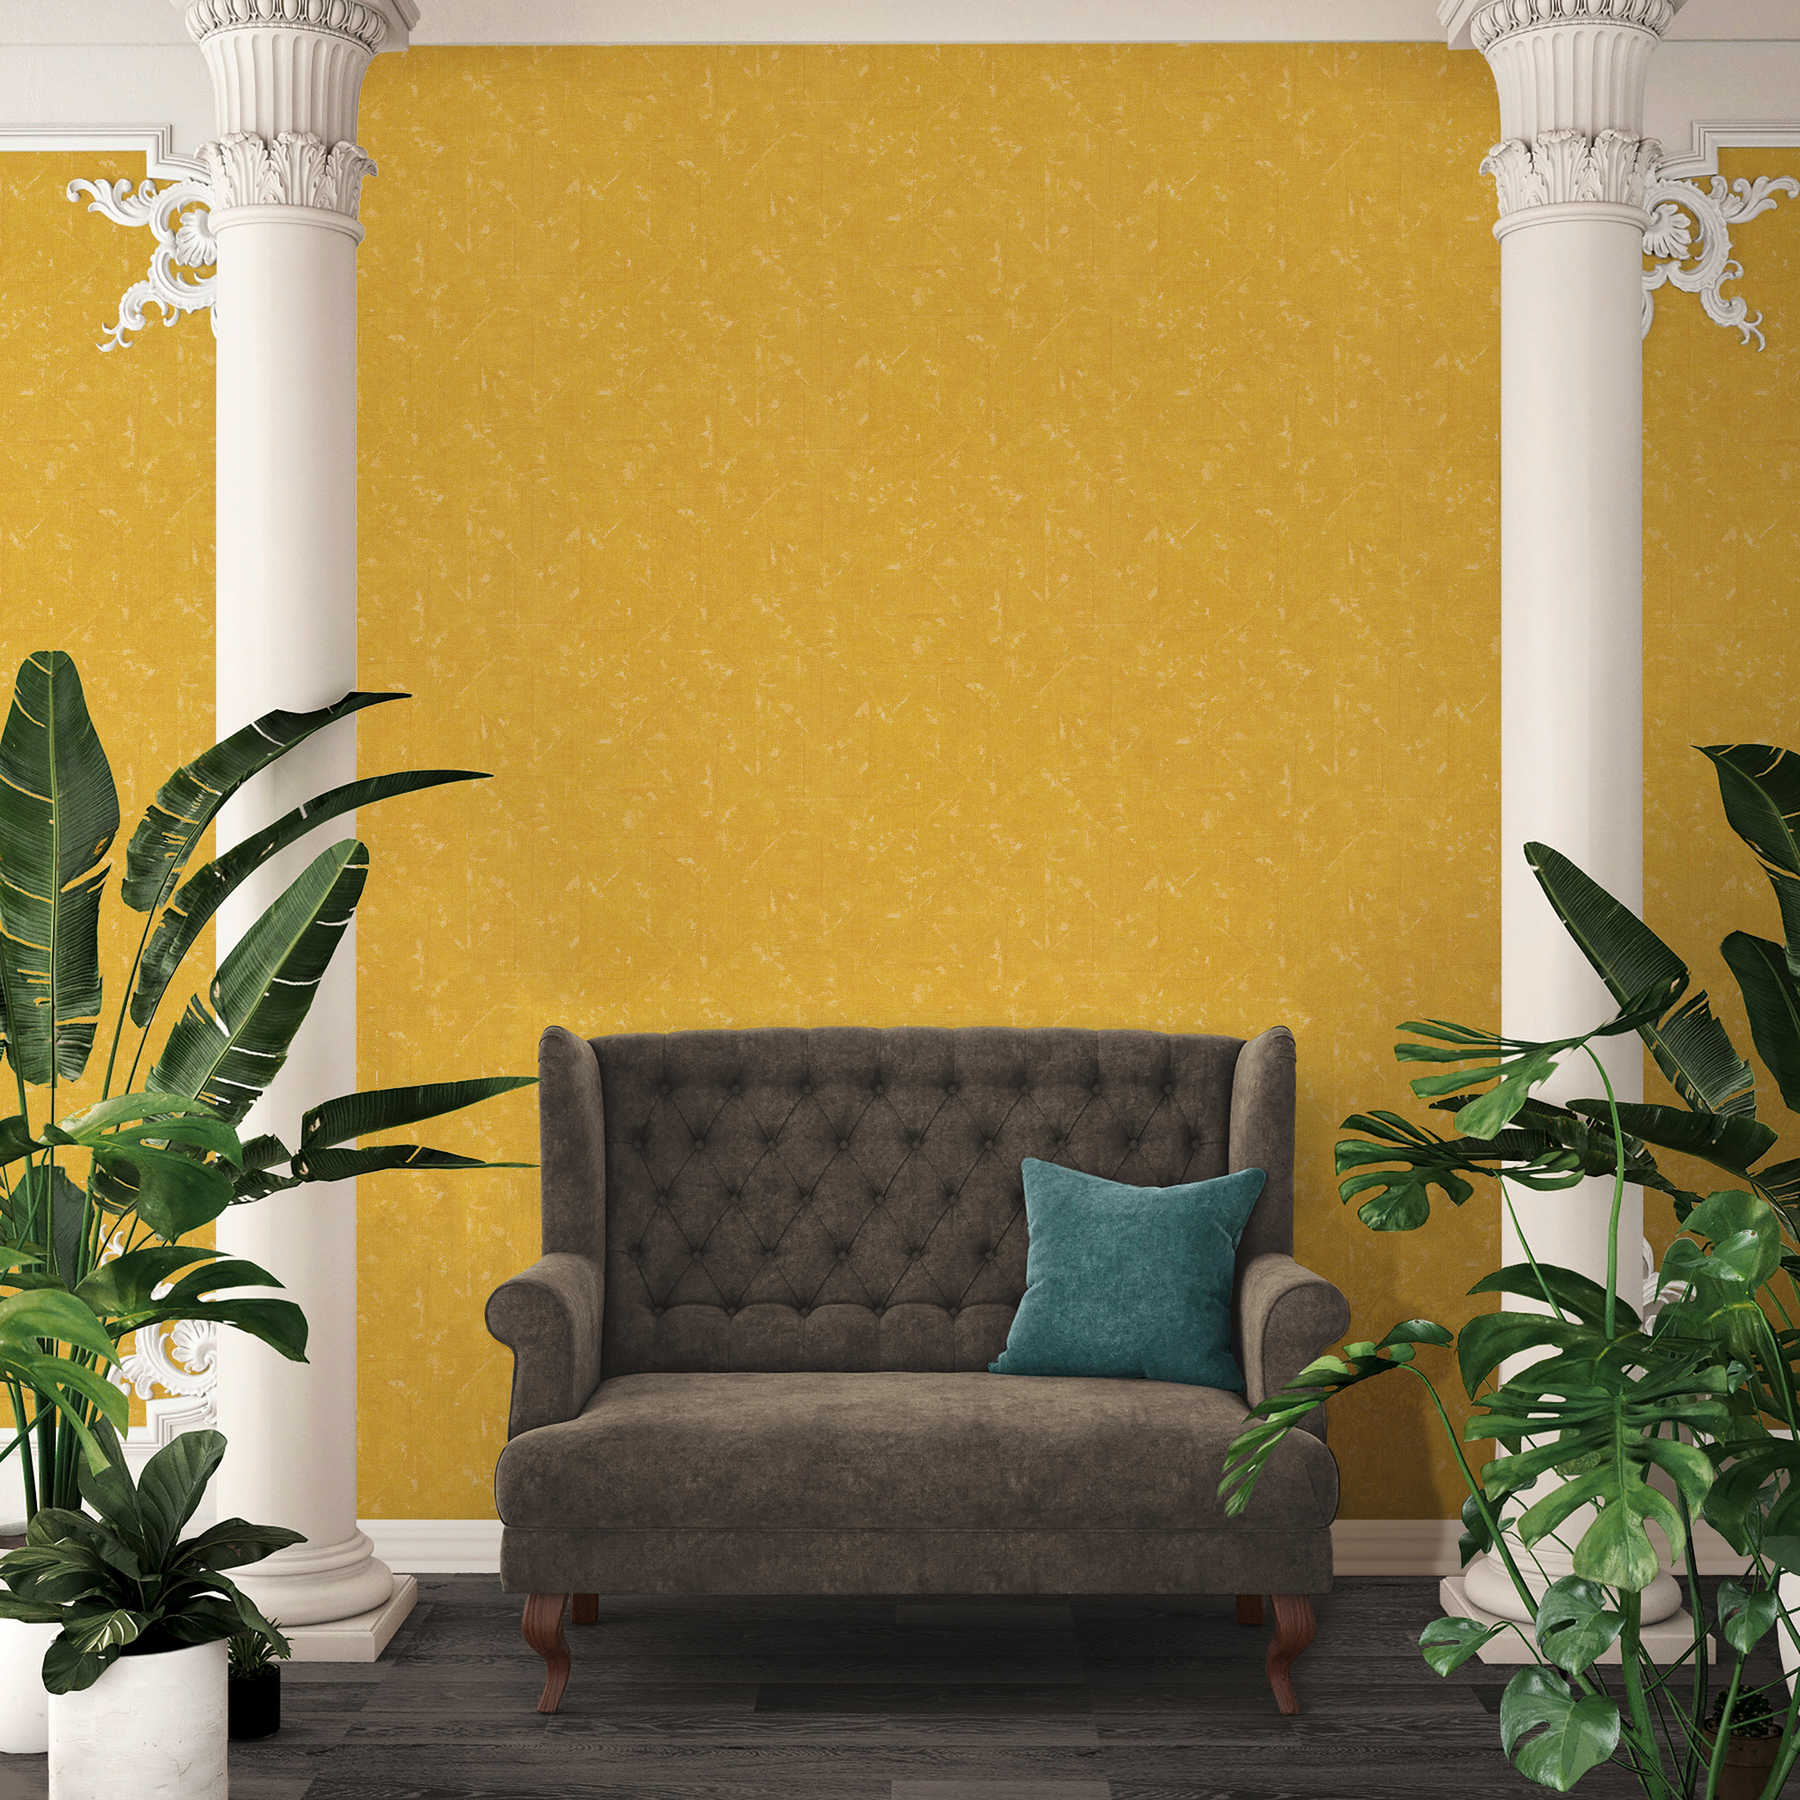             Wallpaper summer yellow, asymmetrical pattern - yellow
        